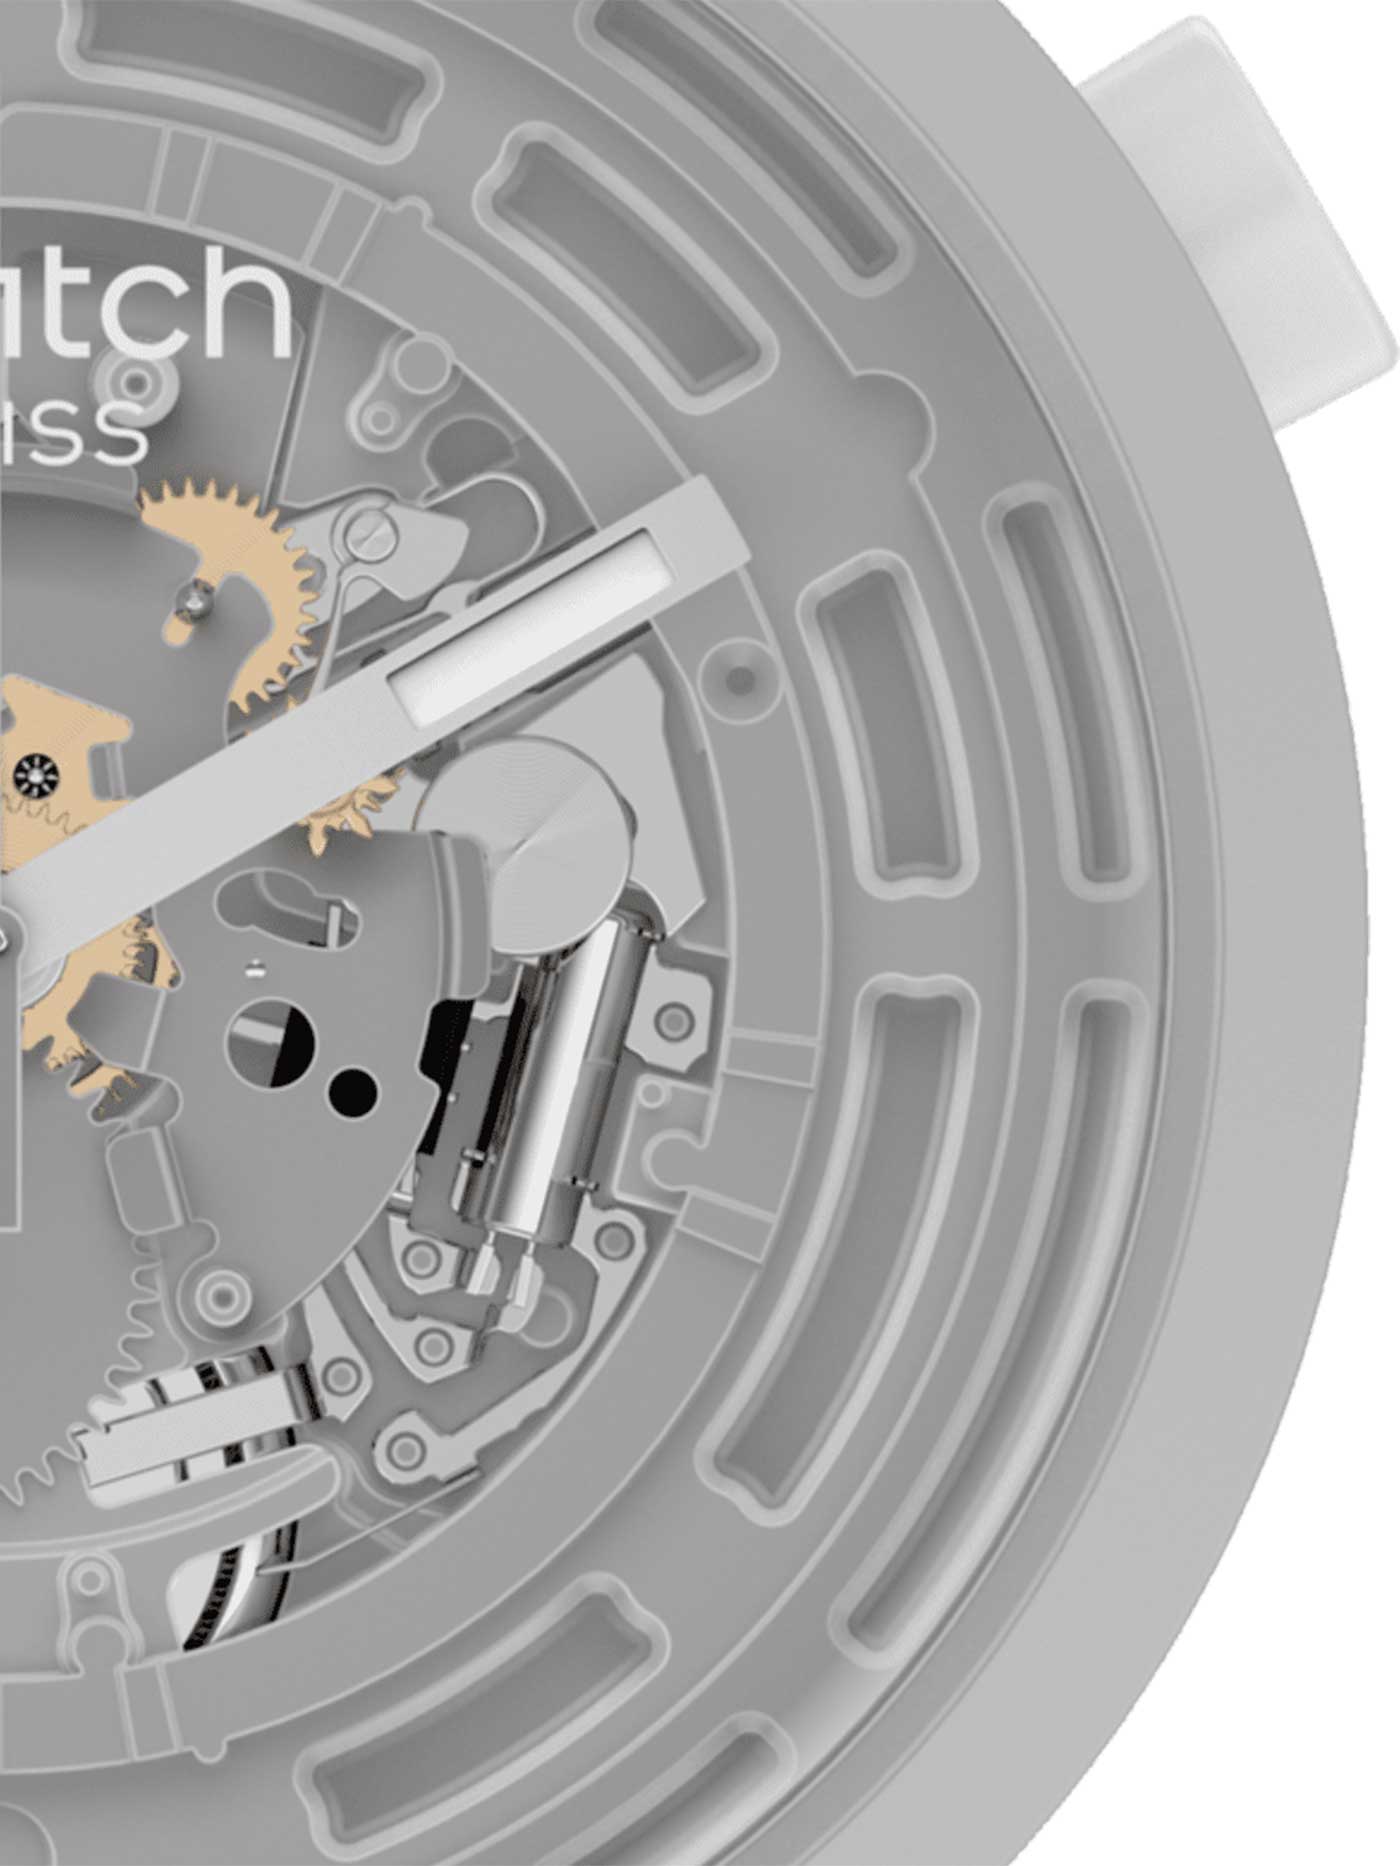 Swatch C Watch